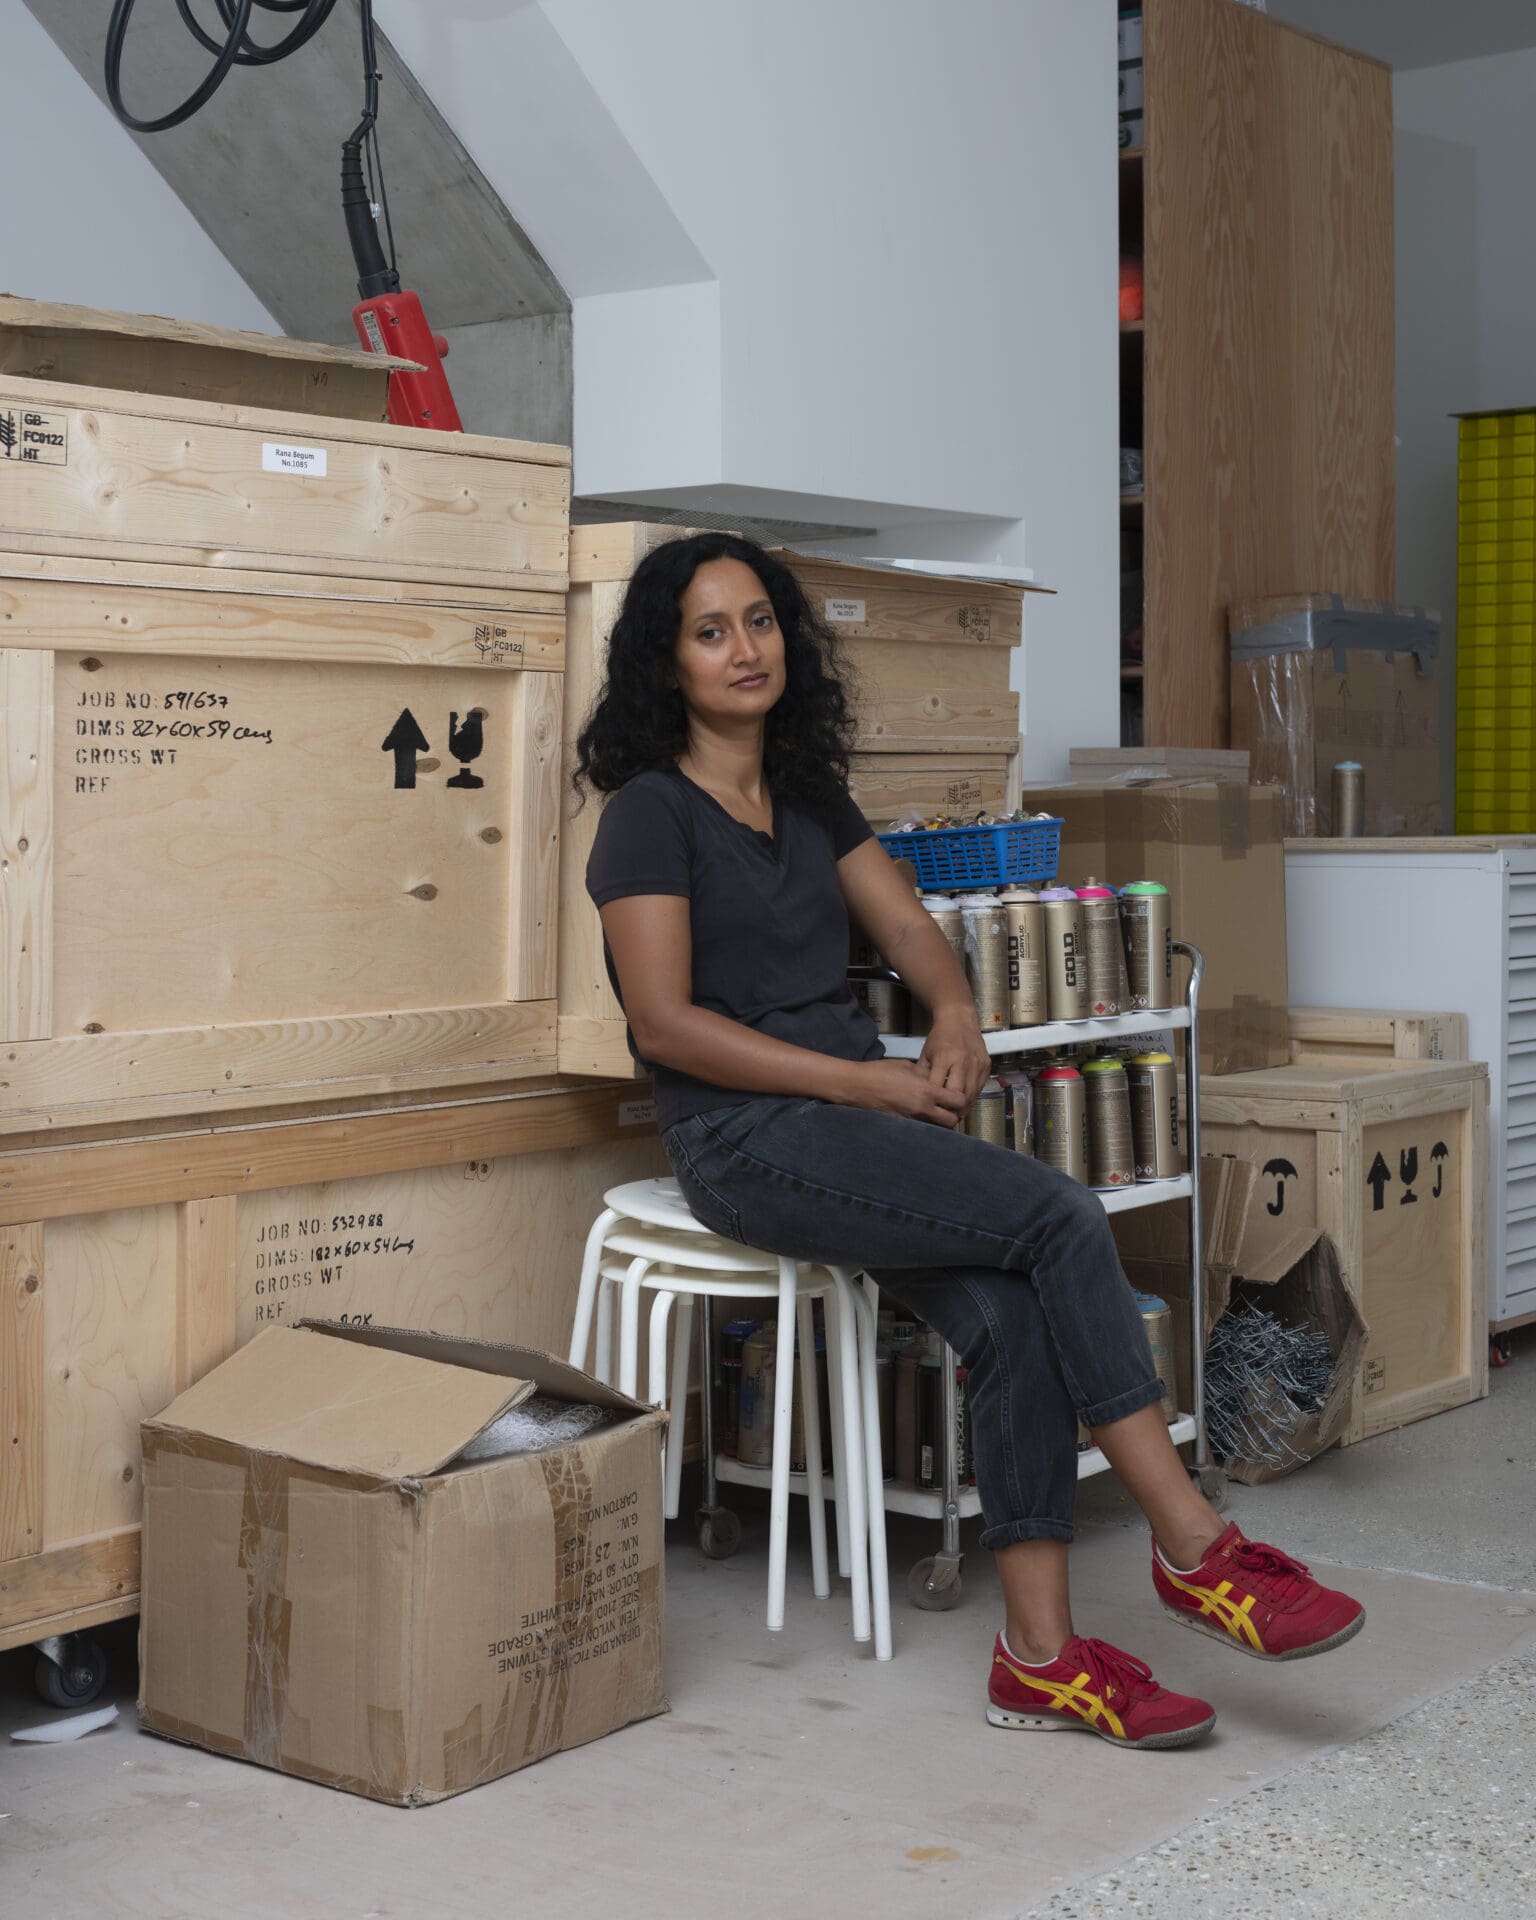 Artist Rana Begum in her studio, North London